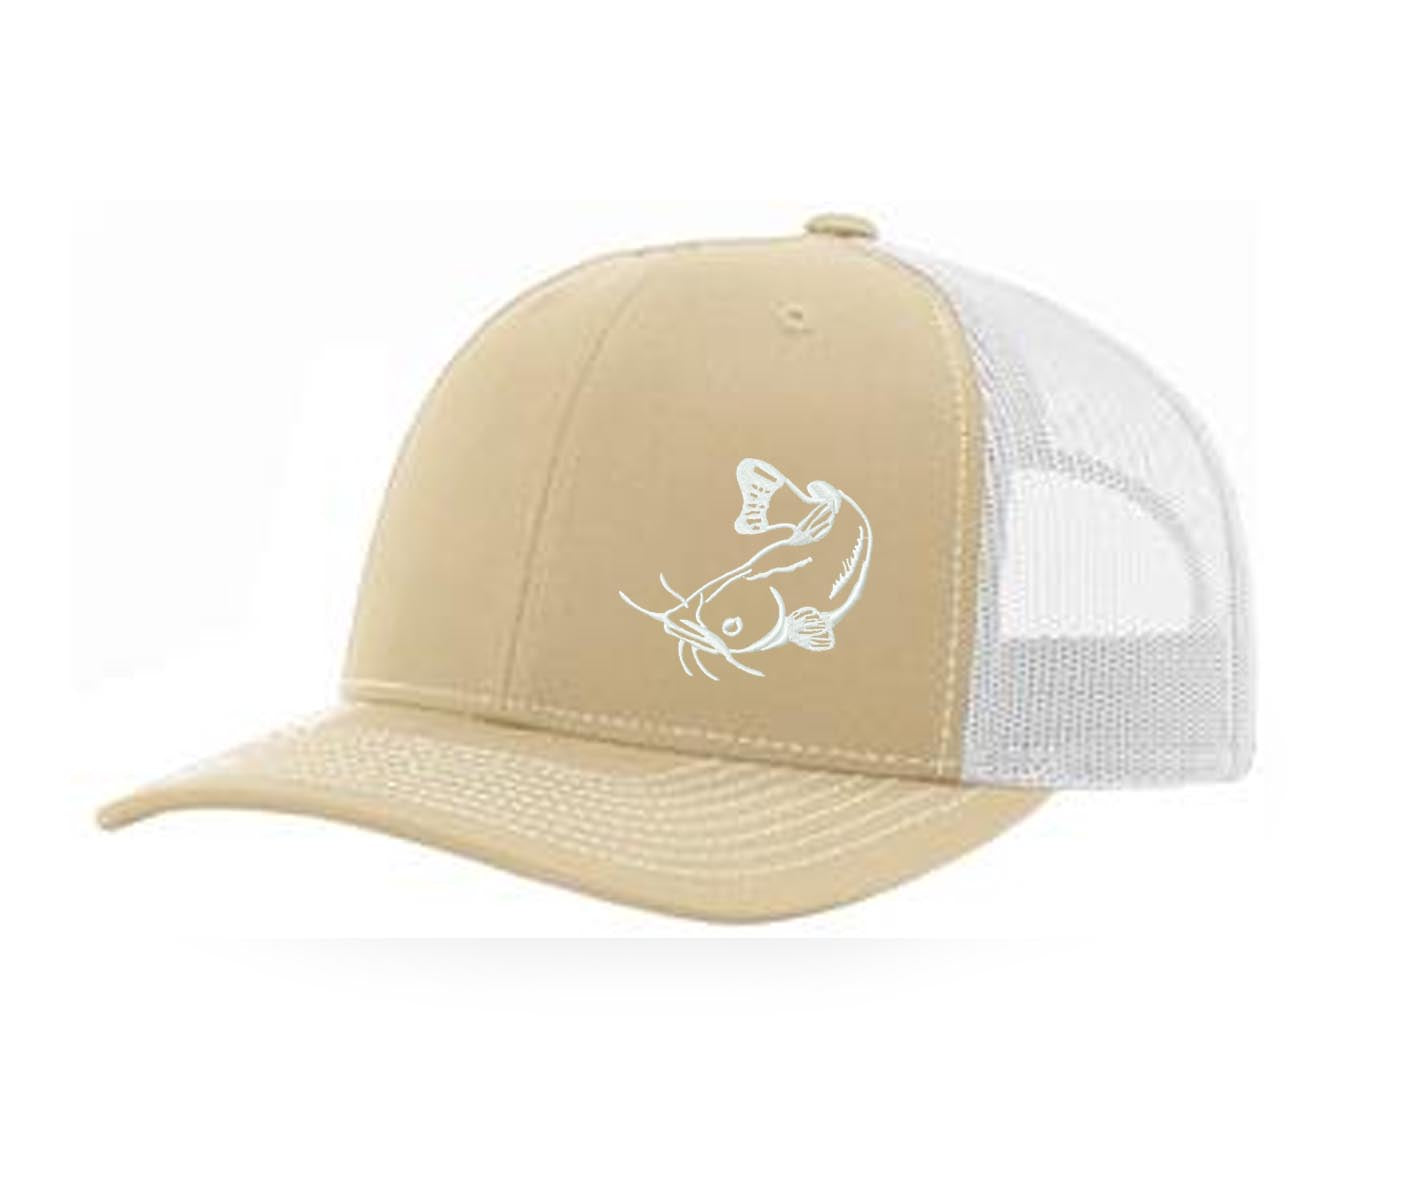 Swamp Cracker Catfish Snapback Hat, Tan/White